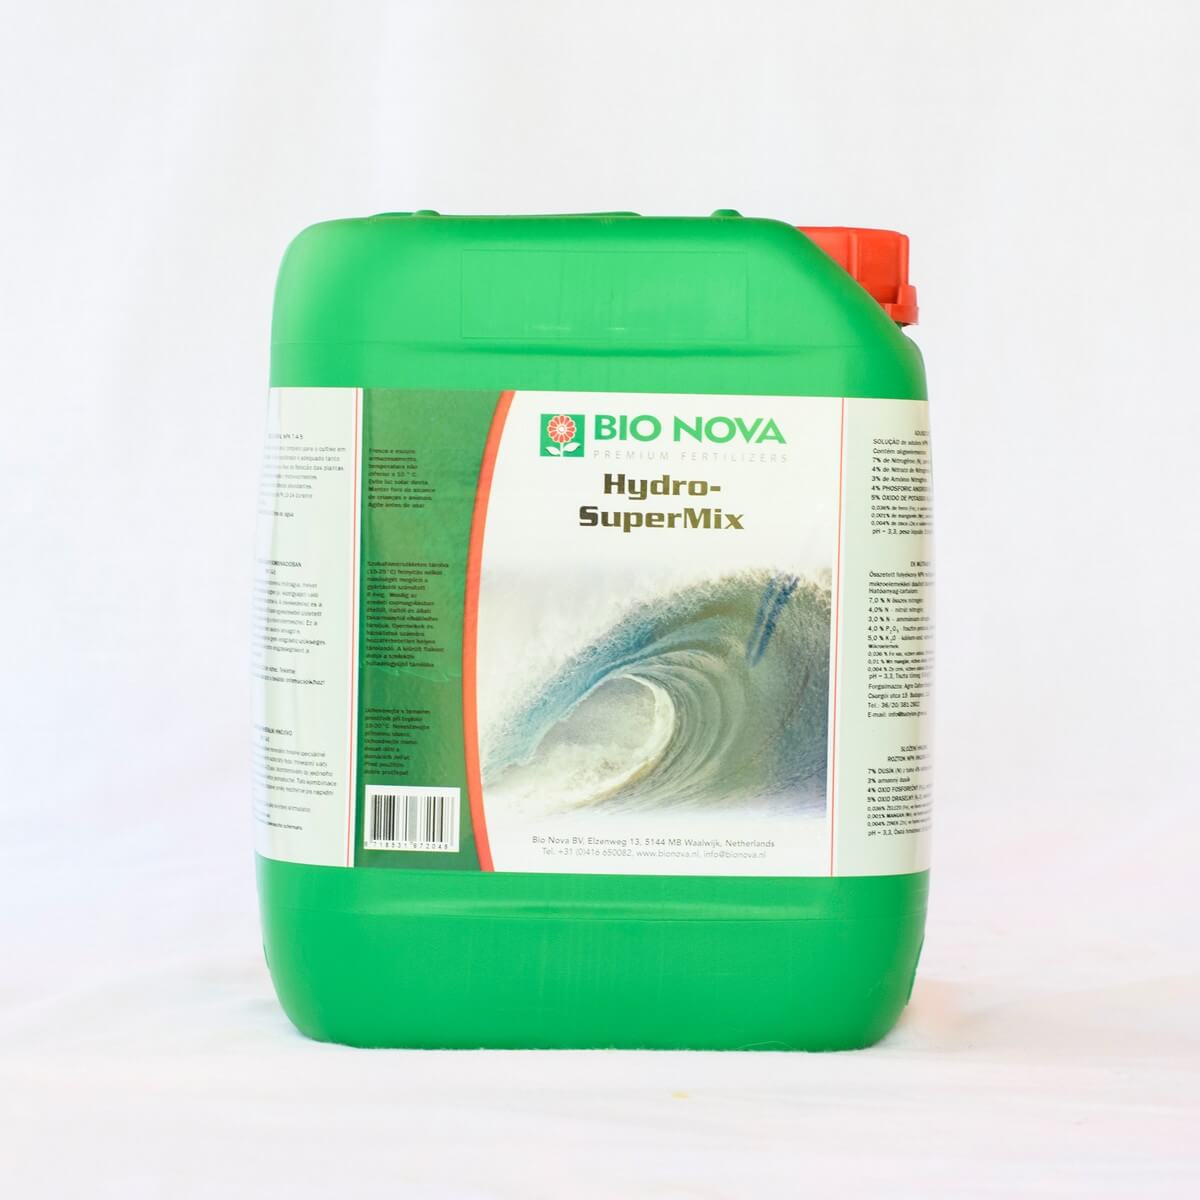 Bio-Nova Hydro-Supermix (7-4-5) nutrient solution for hydroponics 5 l